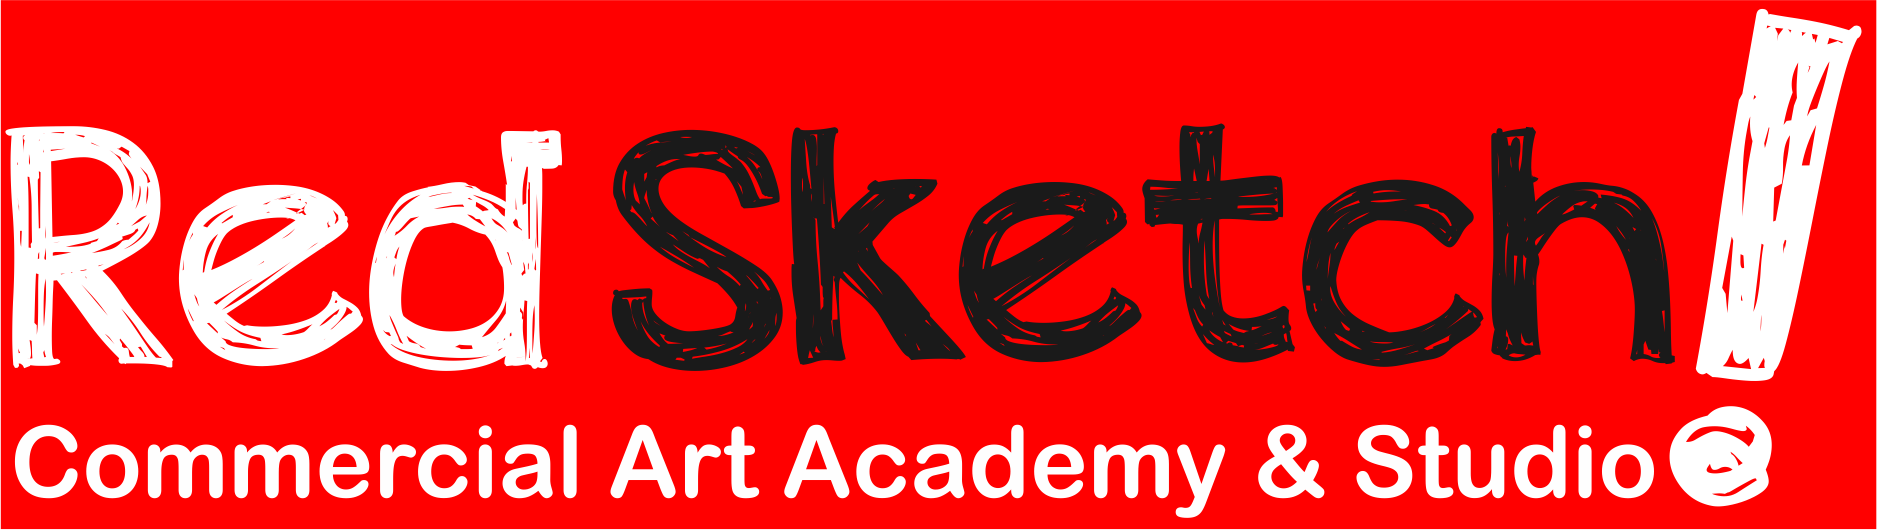 RedSketch - Commercial Art Academy & Studio